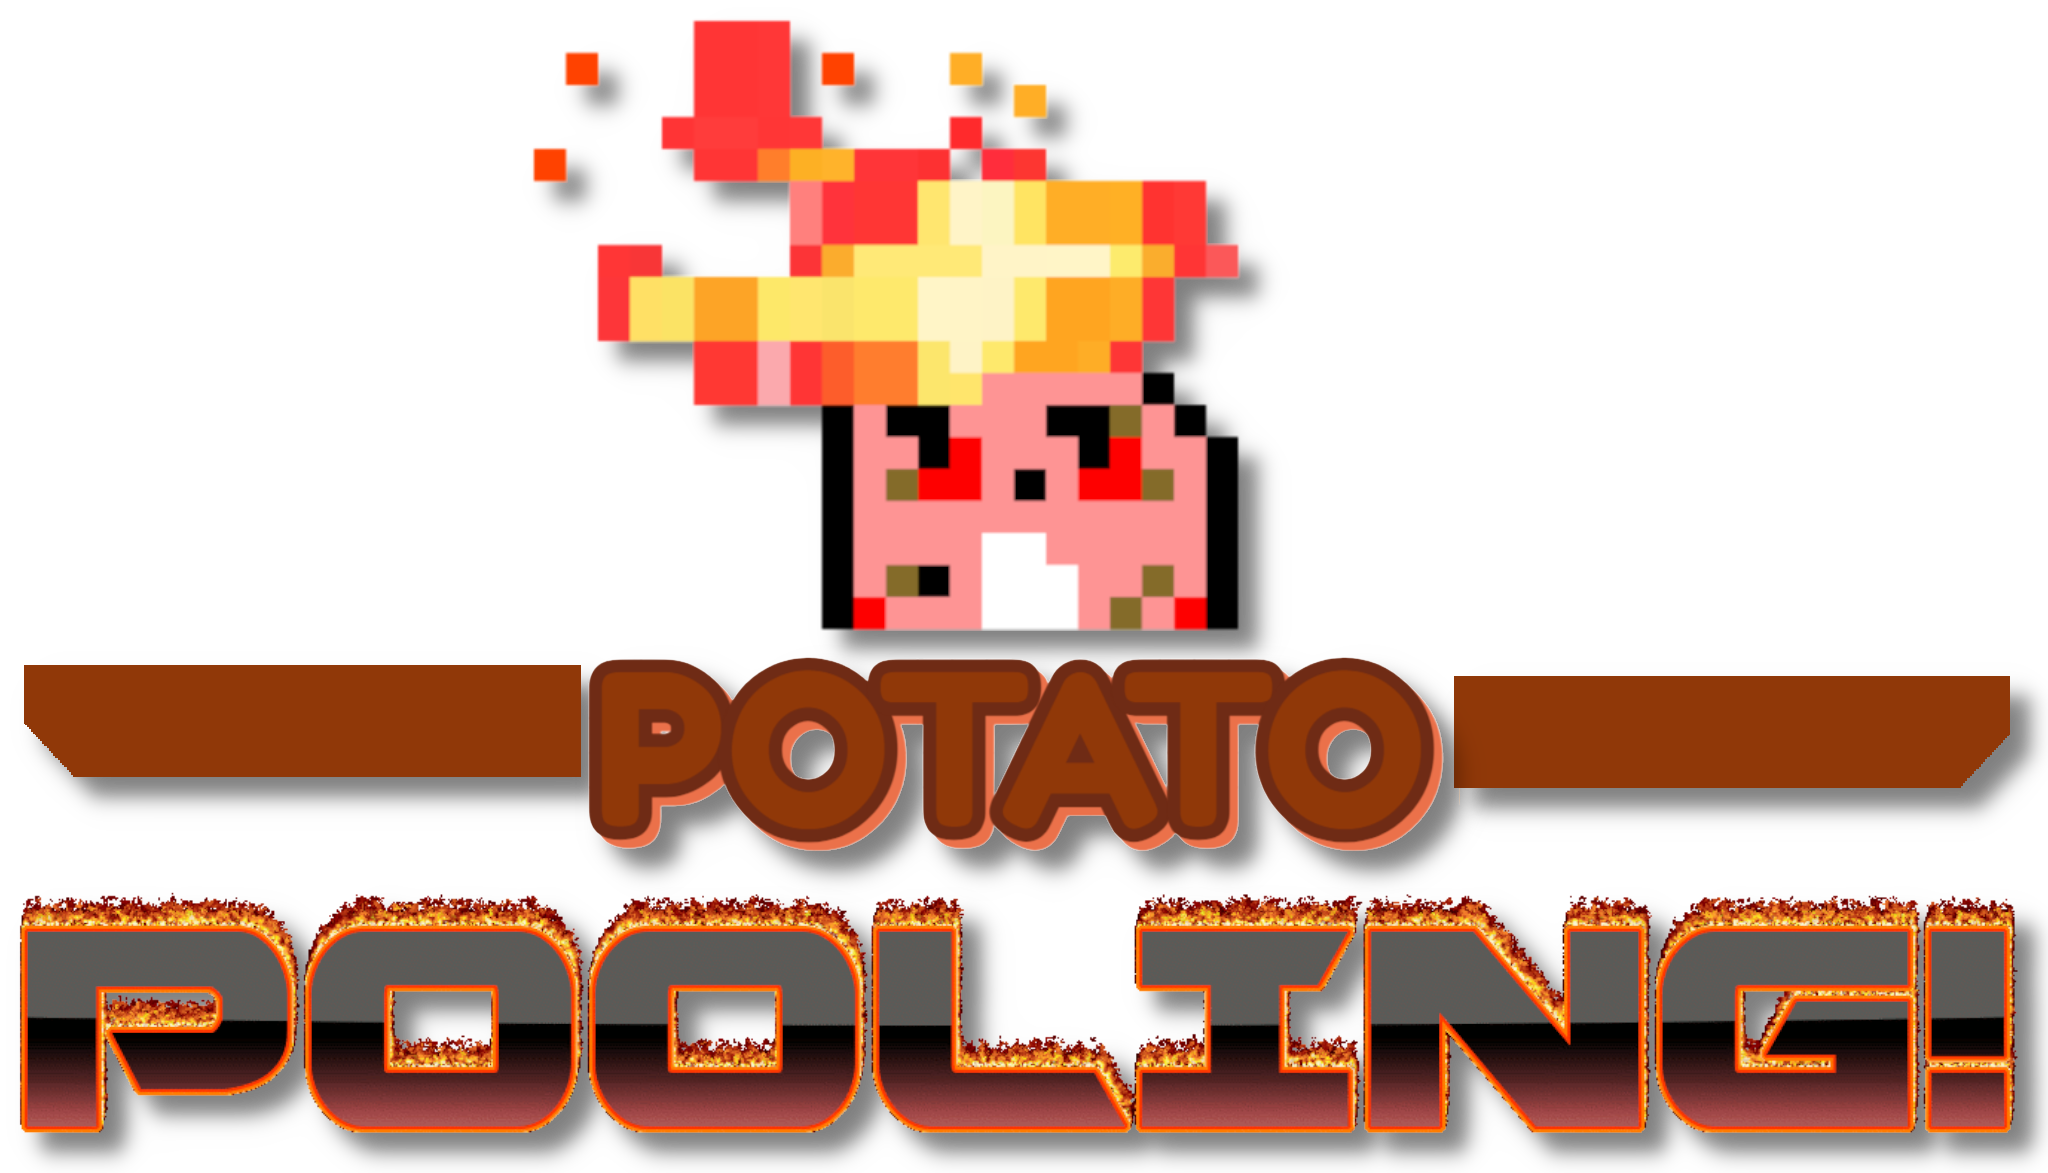 Potato Pooling